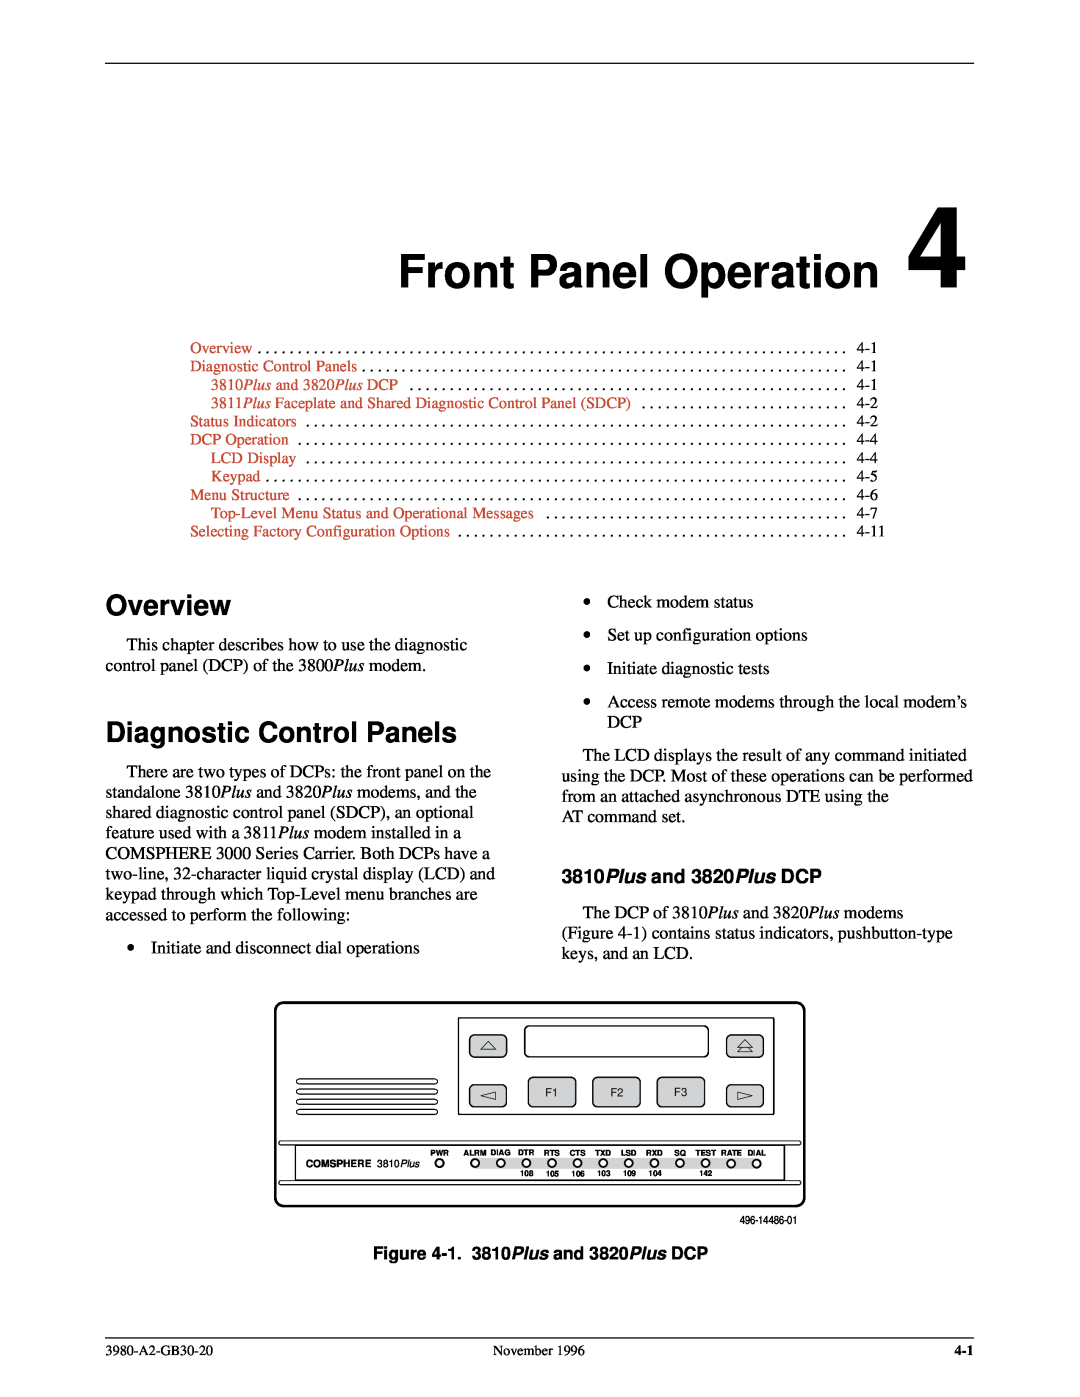 Paradyne 3800PLUS manual Front Panel Operation, Diagnostic Control Panels, 3810Plus and 3820Plus DCP, Overview 